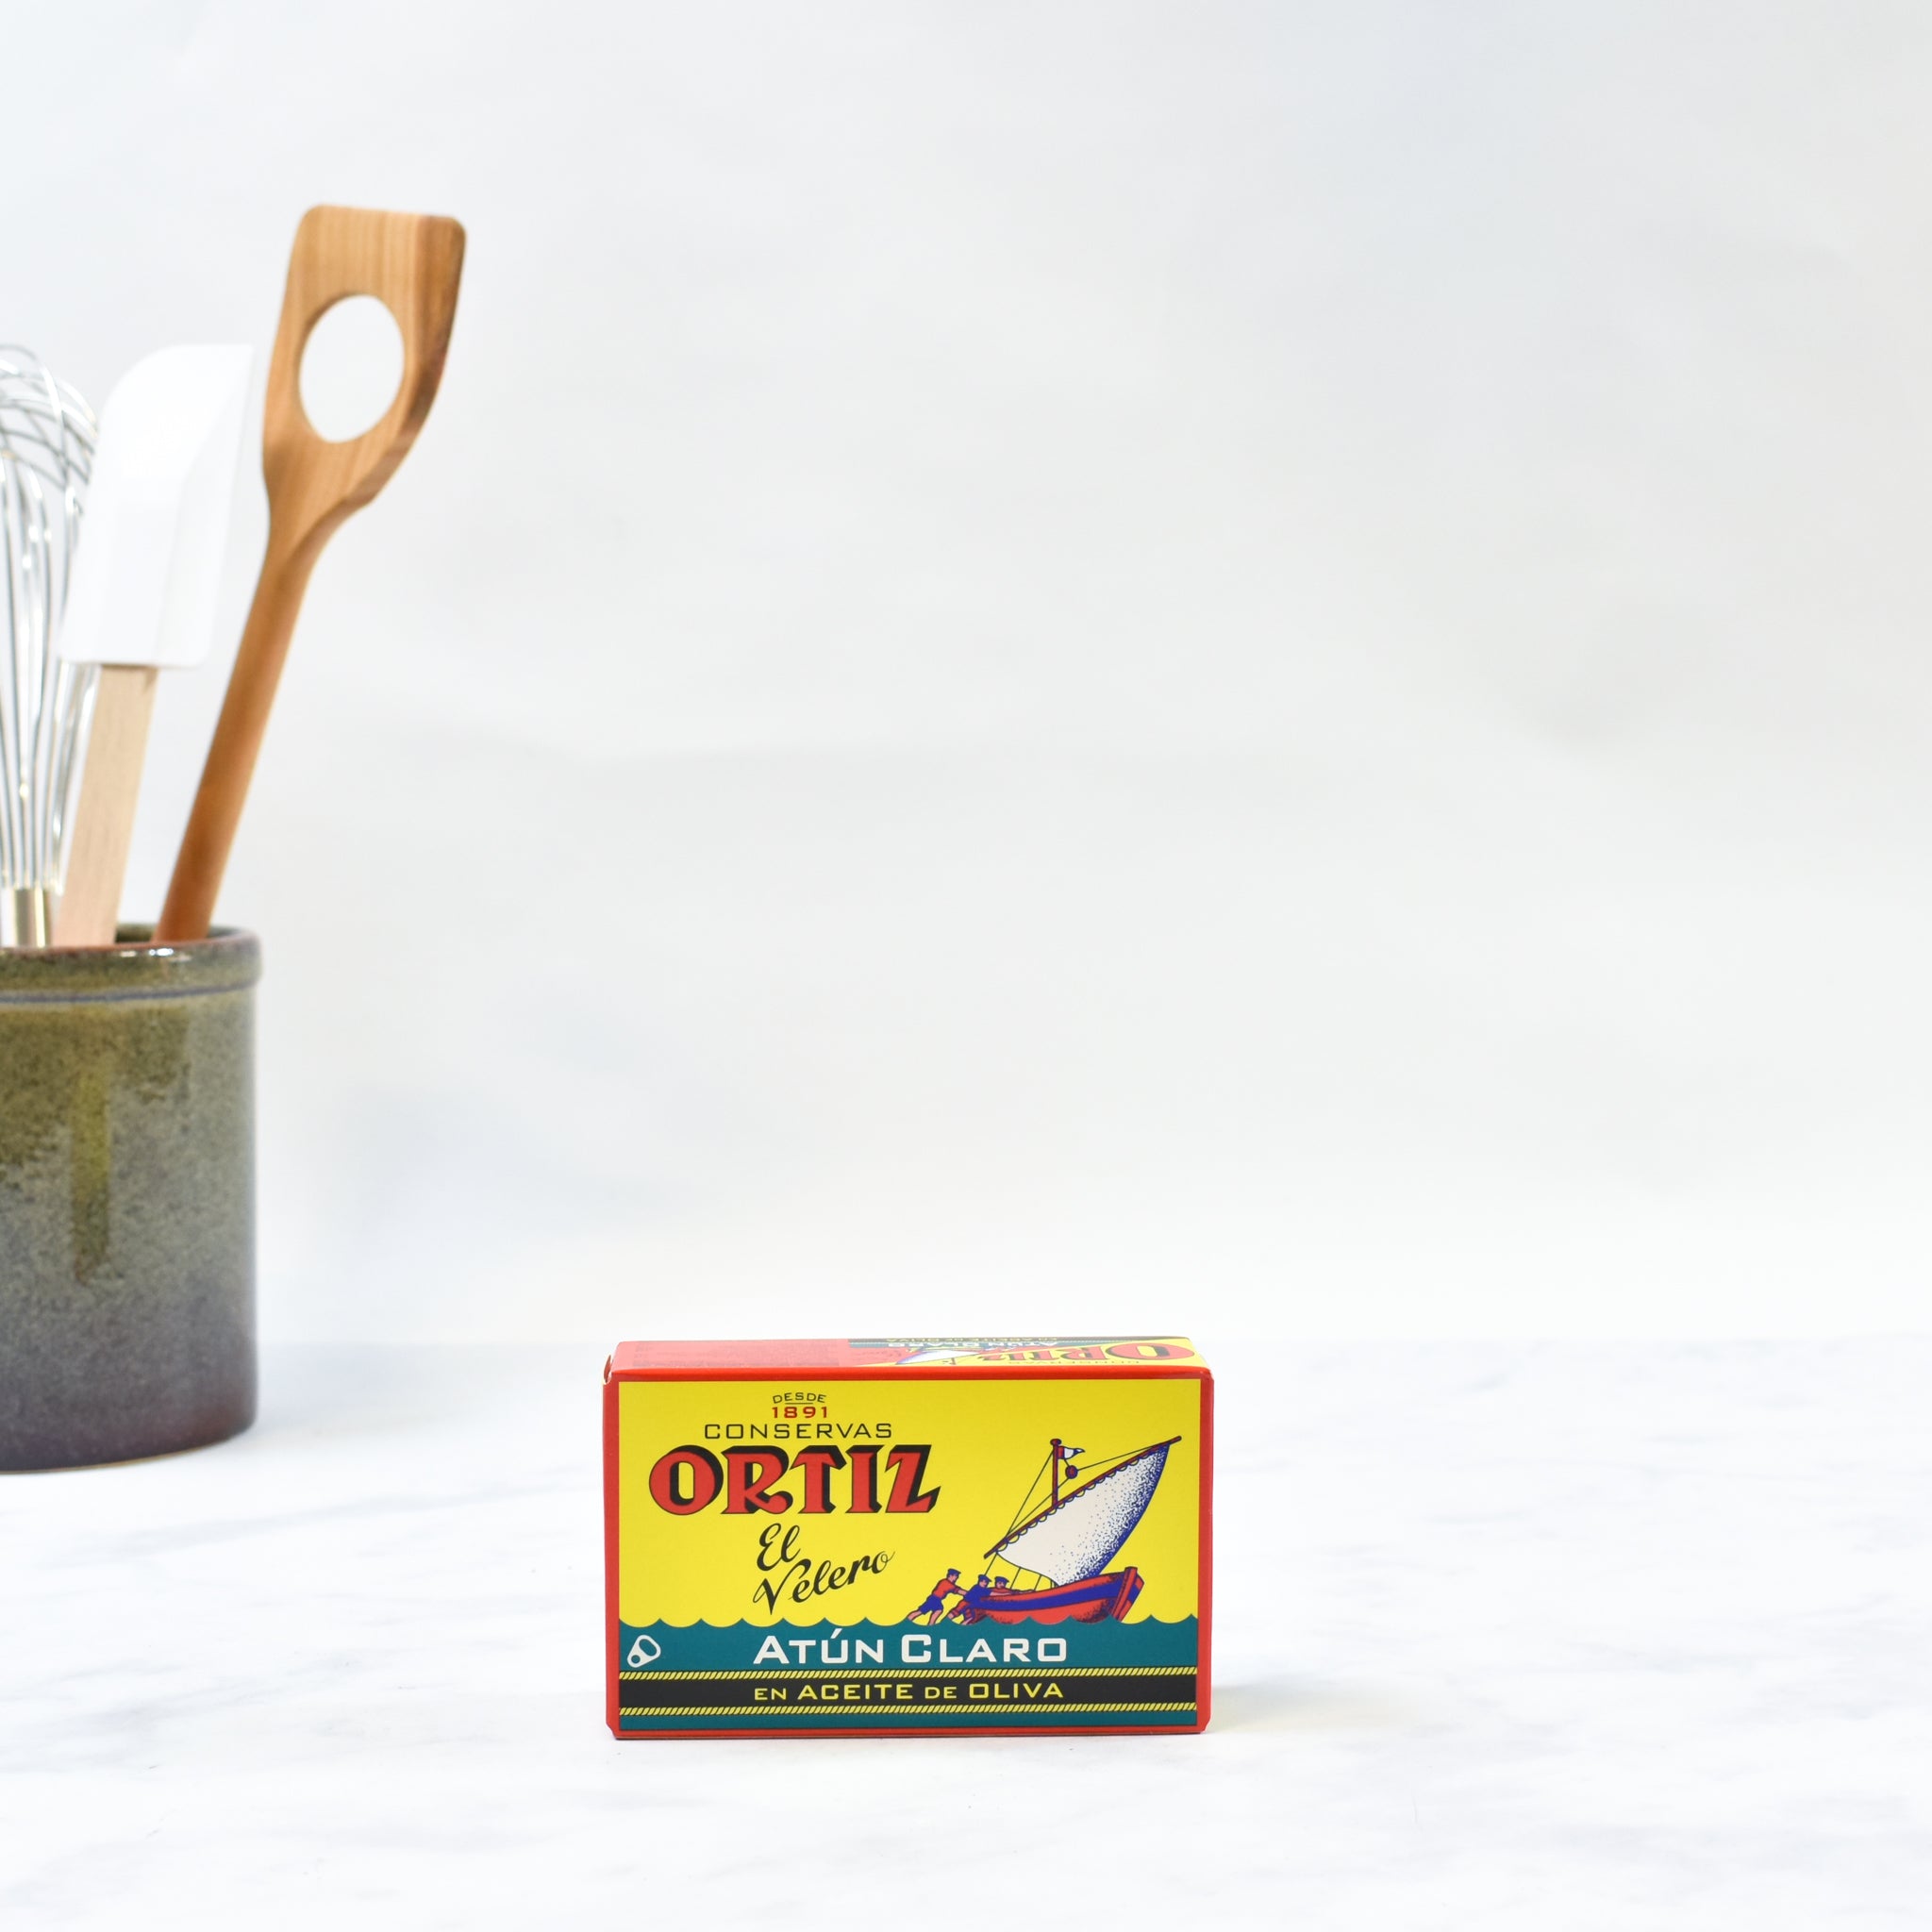 Ortiz Atun Claro Fillet In Olive Oil 112g Ingredients Seaweed Squid Ink Fish Spanish Food Lifestyle Packaging Shot